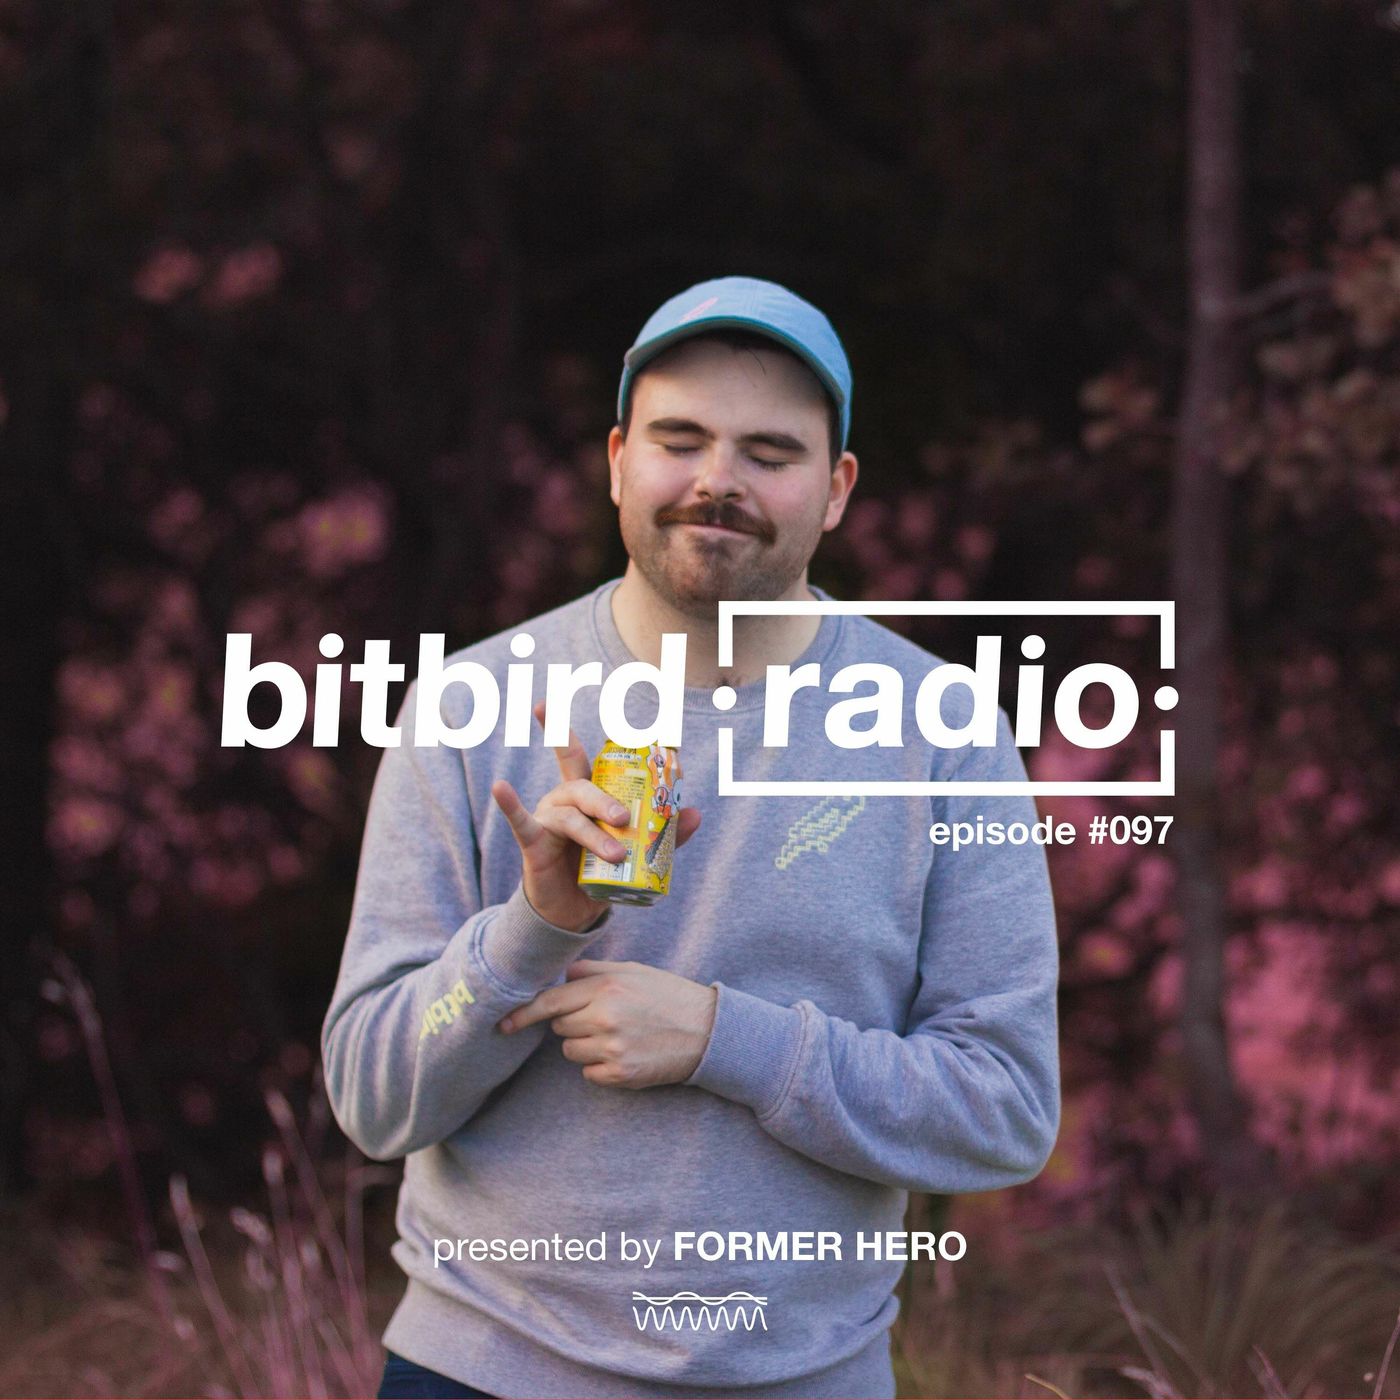 Former Hero Presents: bitbird radio #097